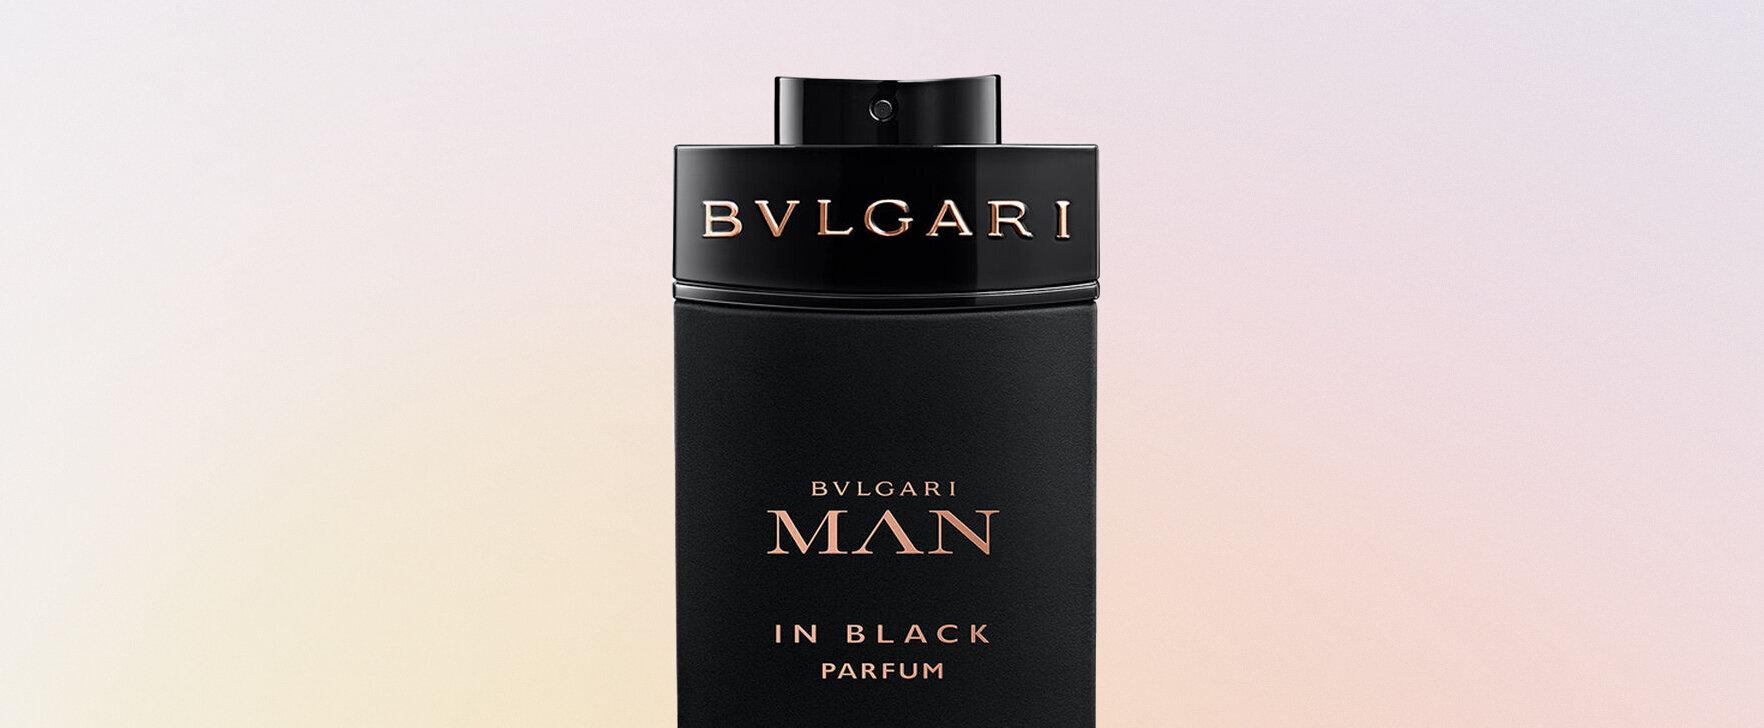 A New Dimension of Intensity: "Bvlgari Man in Black Parfum" by Bvlgari